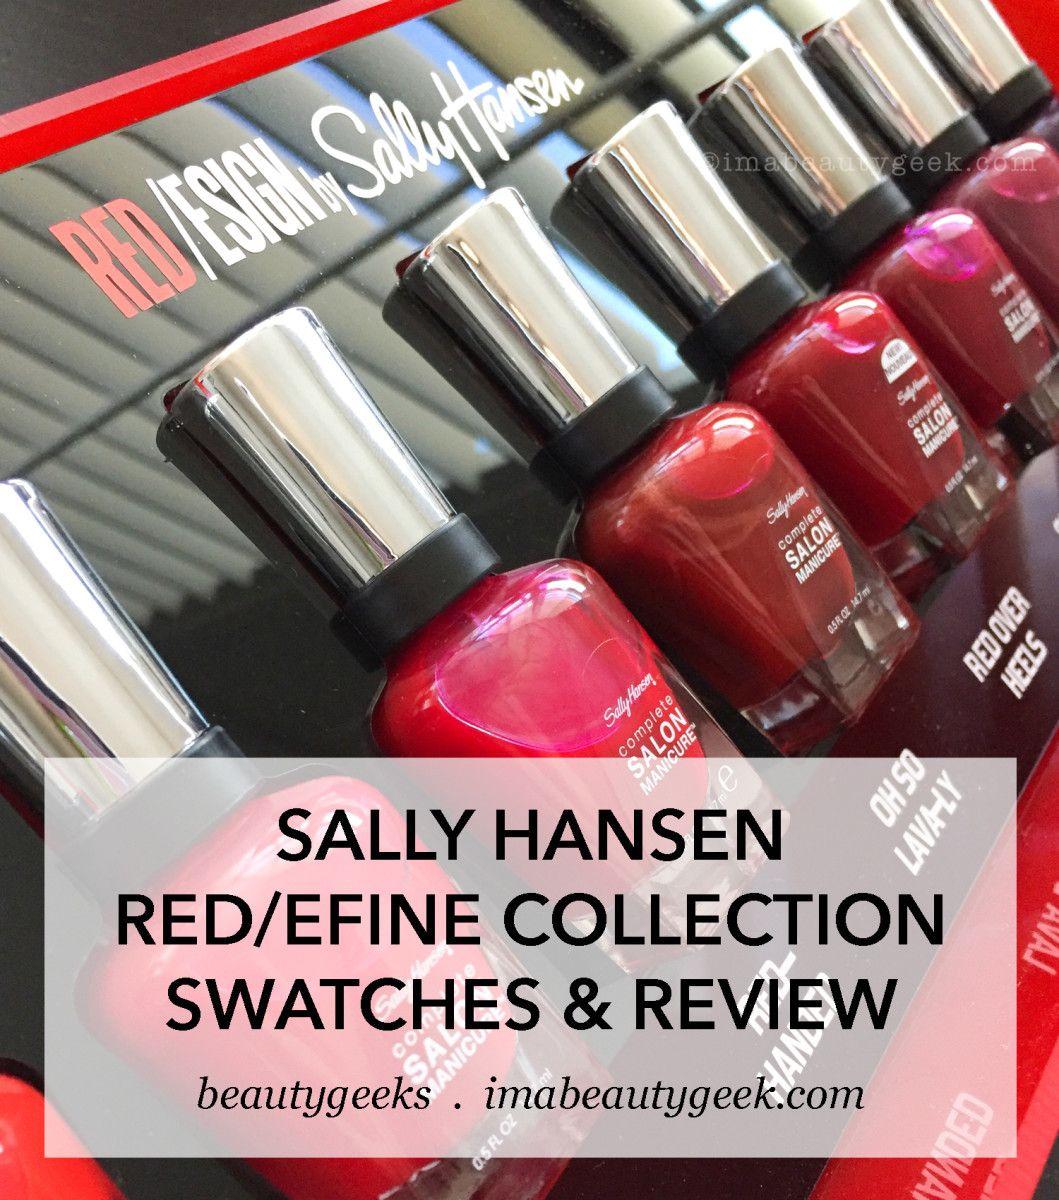 The Sally Hansen Logo - SALLY HANSEN RED/ESIGN COLLECTION SWATCHES & REVIEW - Beautygeeks